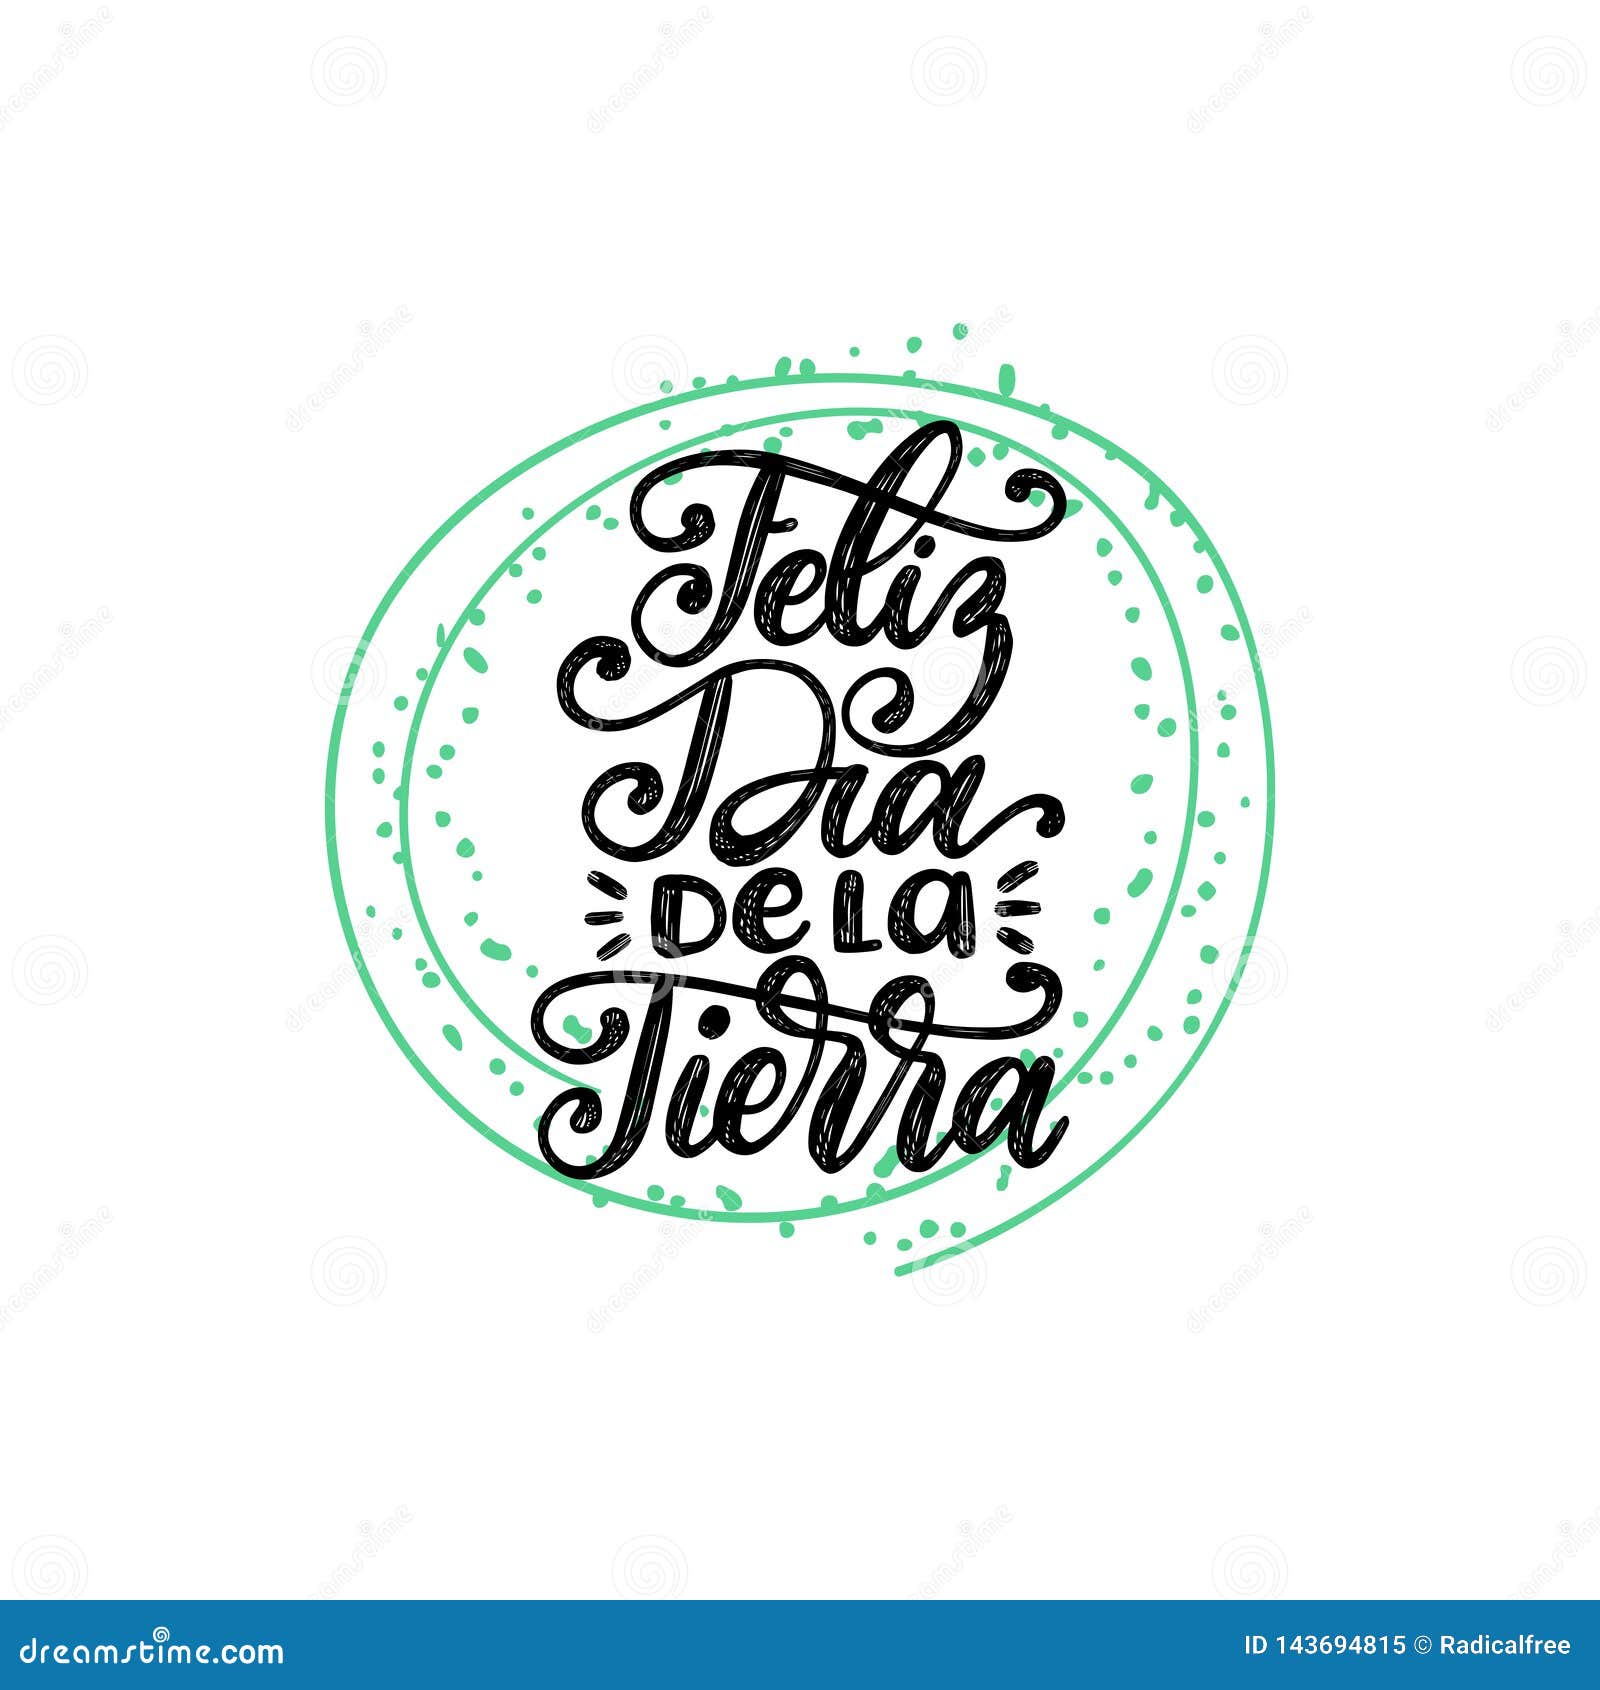 feliz dia de la tierra translated from spanish happy earth day, hand lettering.   for poster etc.